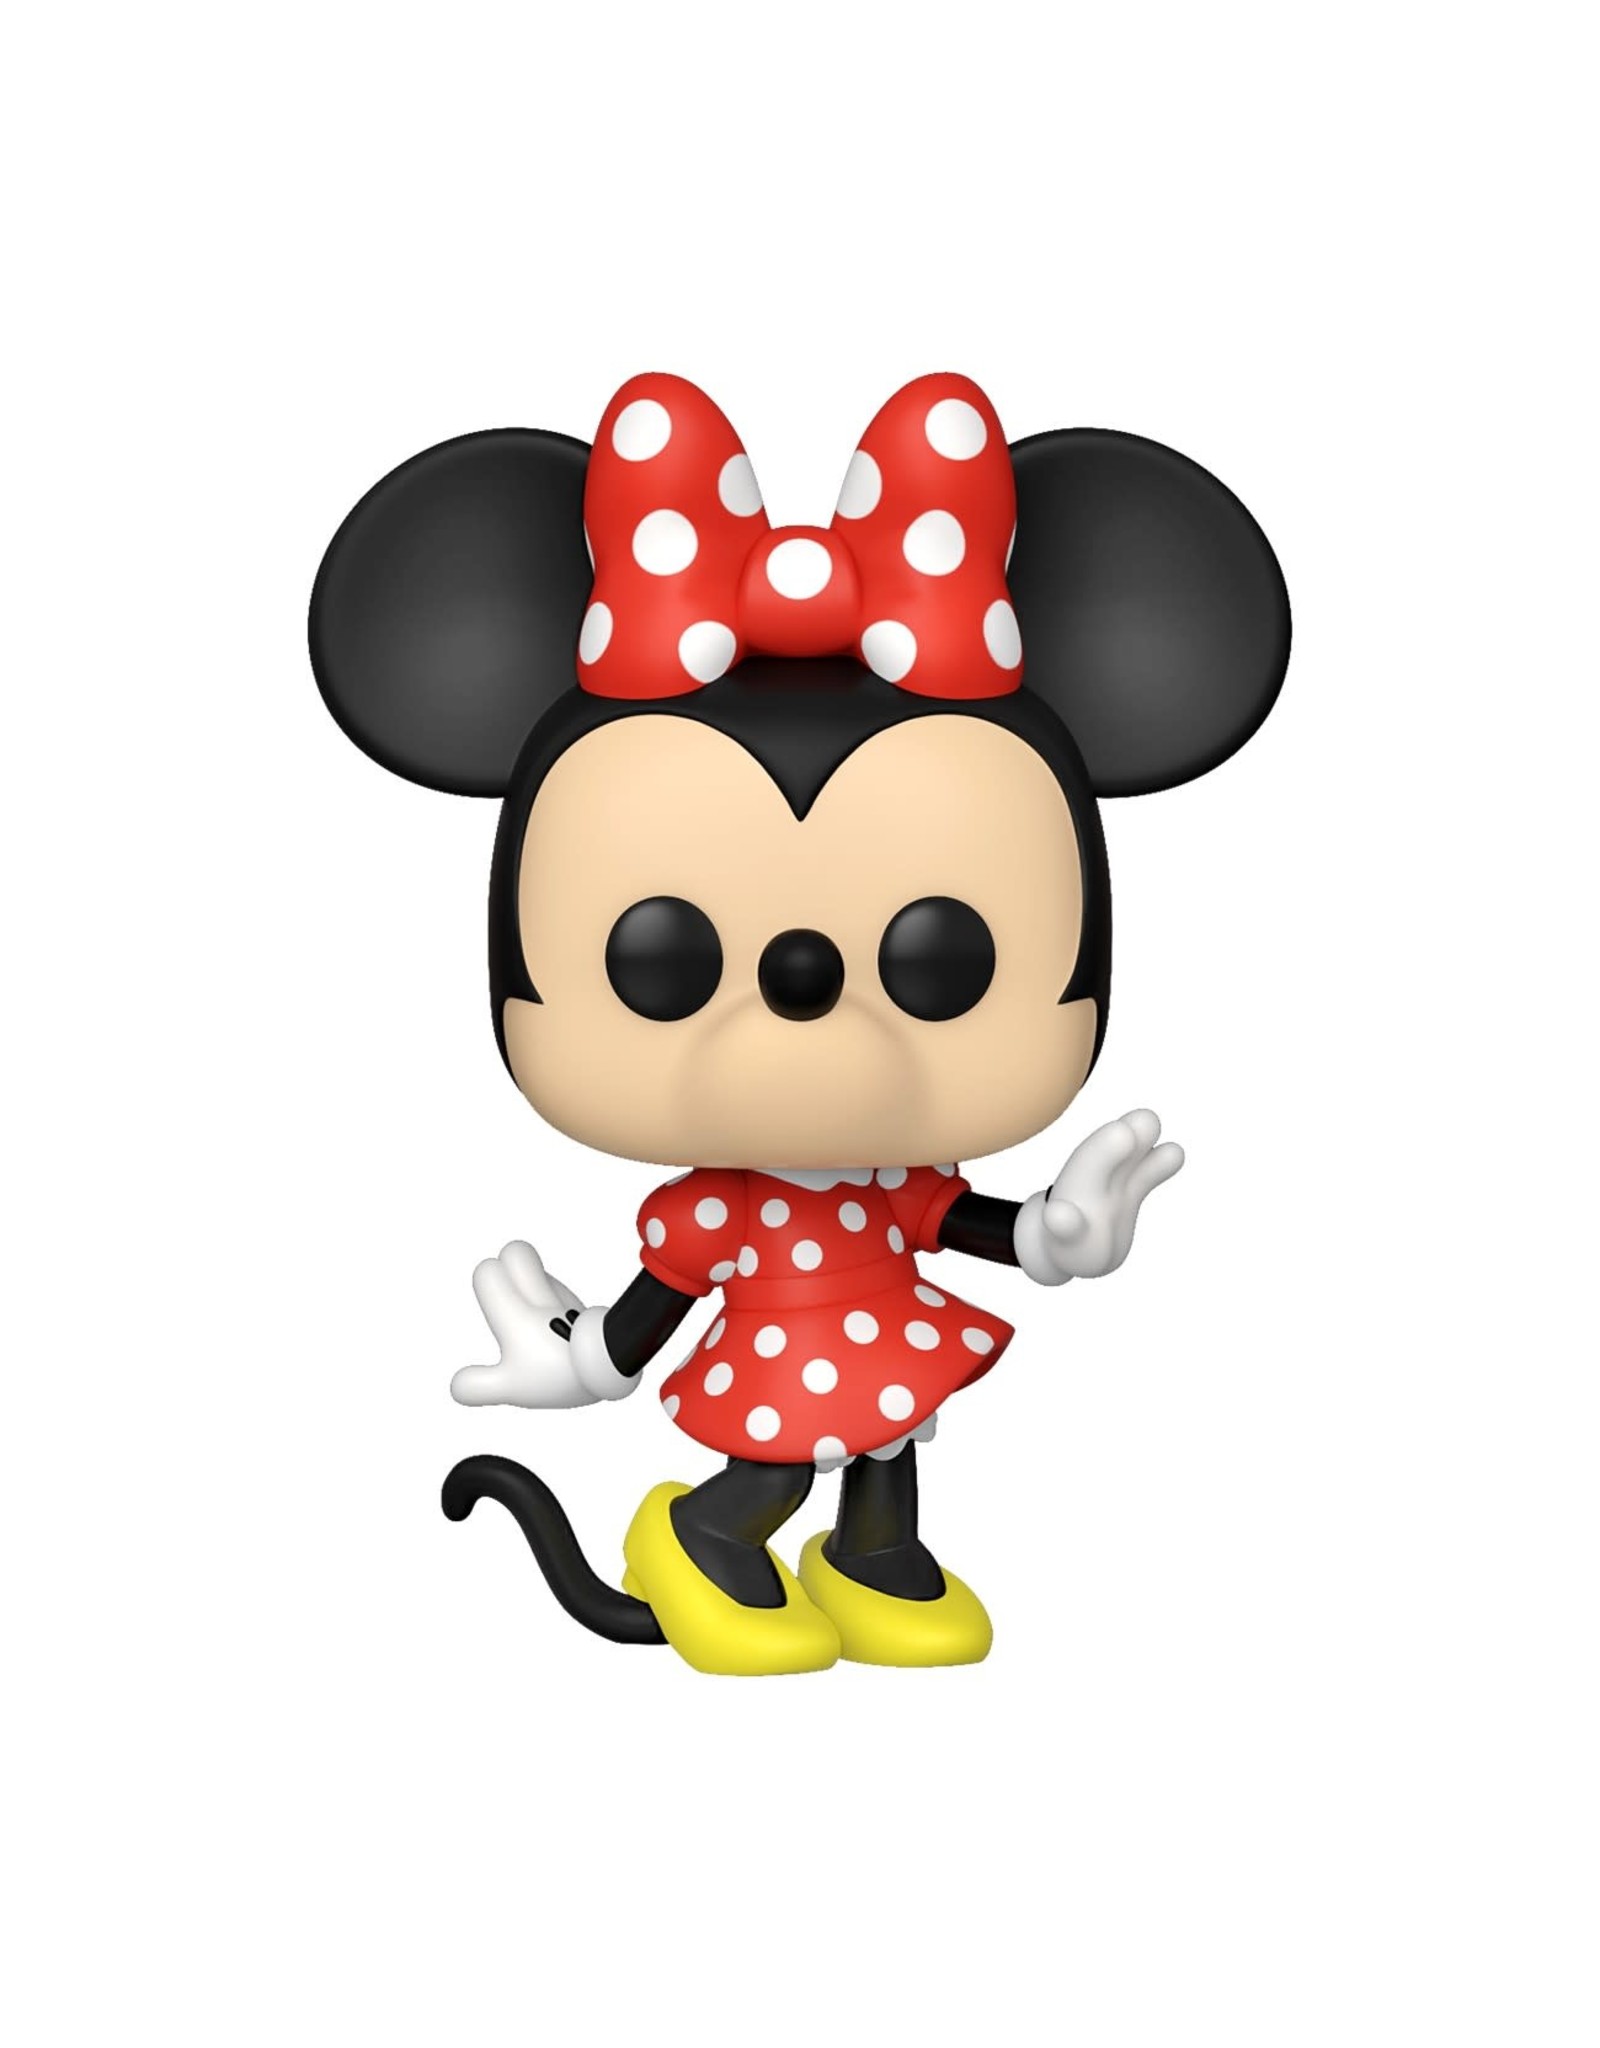 Funko Pop! Funko Pop! Disney nr1188 Minnie Mouse